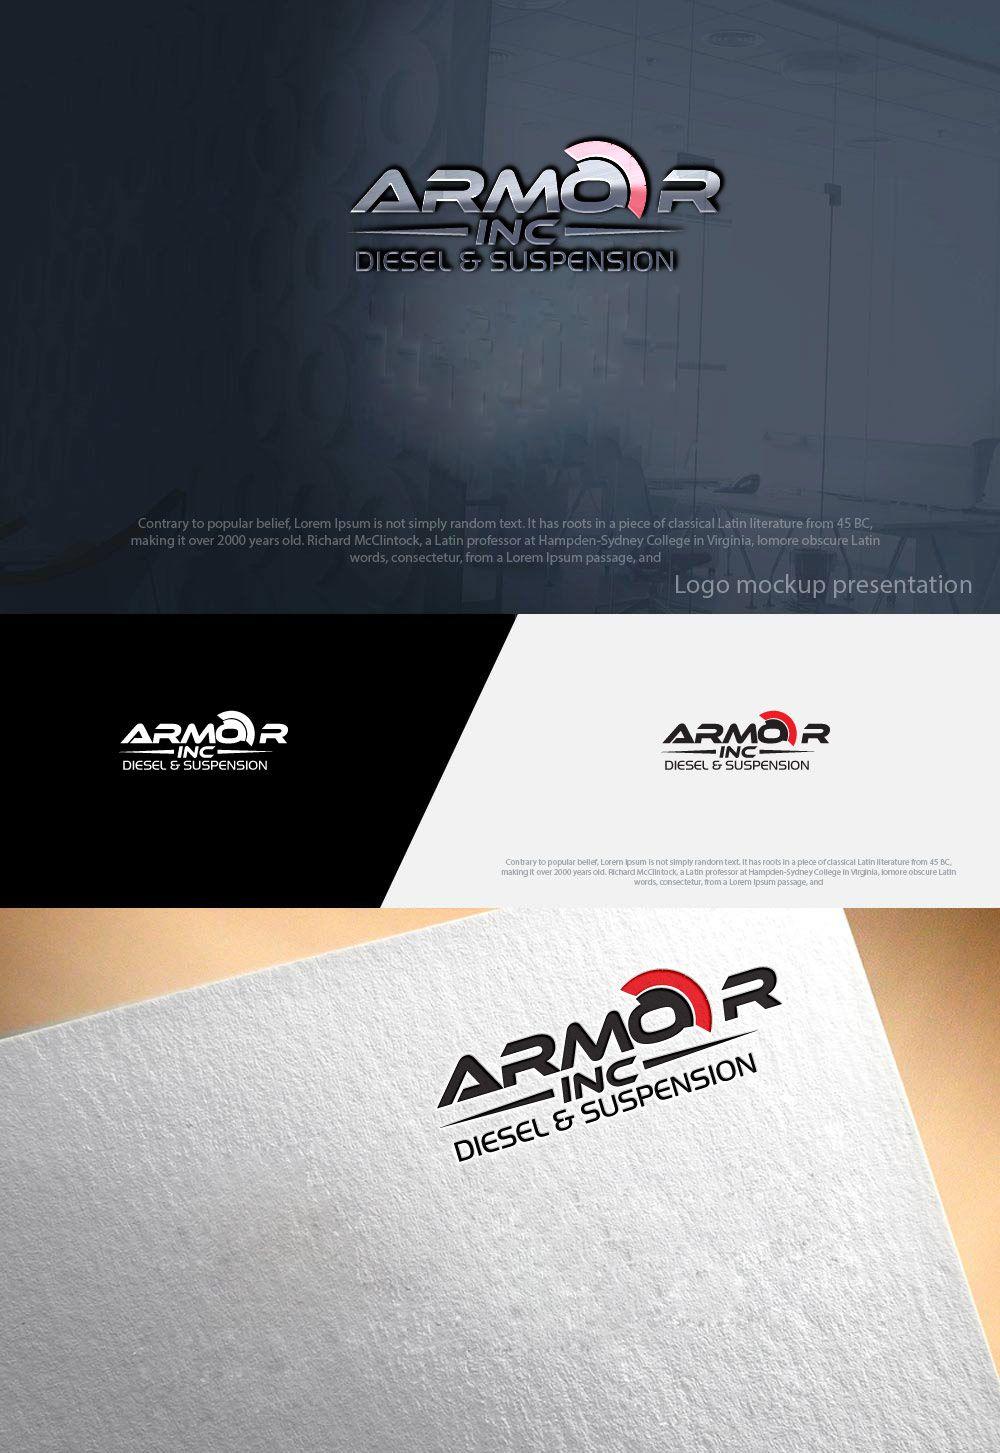 Armar Logo - Logo Design for ARMOR INC DIESEL & SUSPENSION